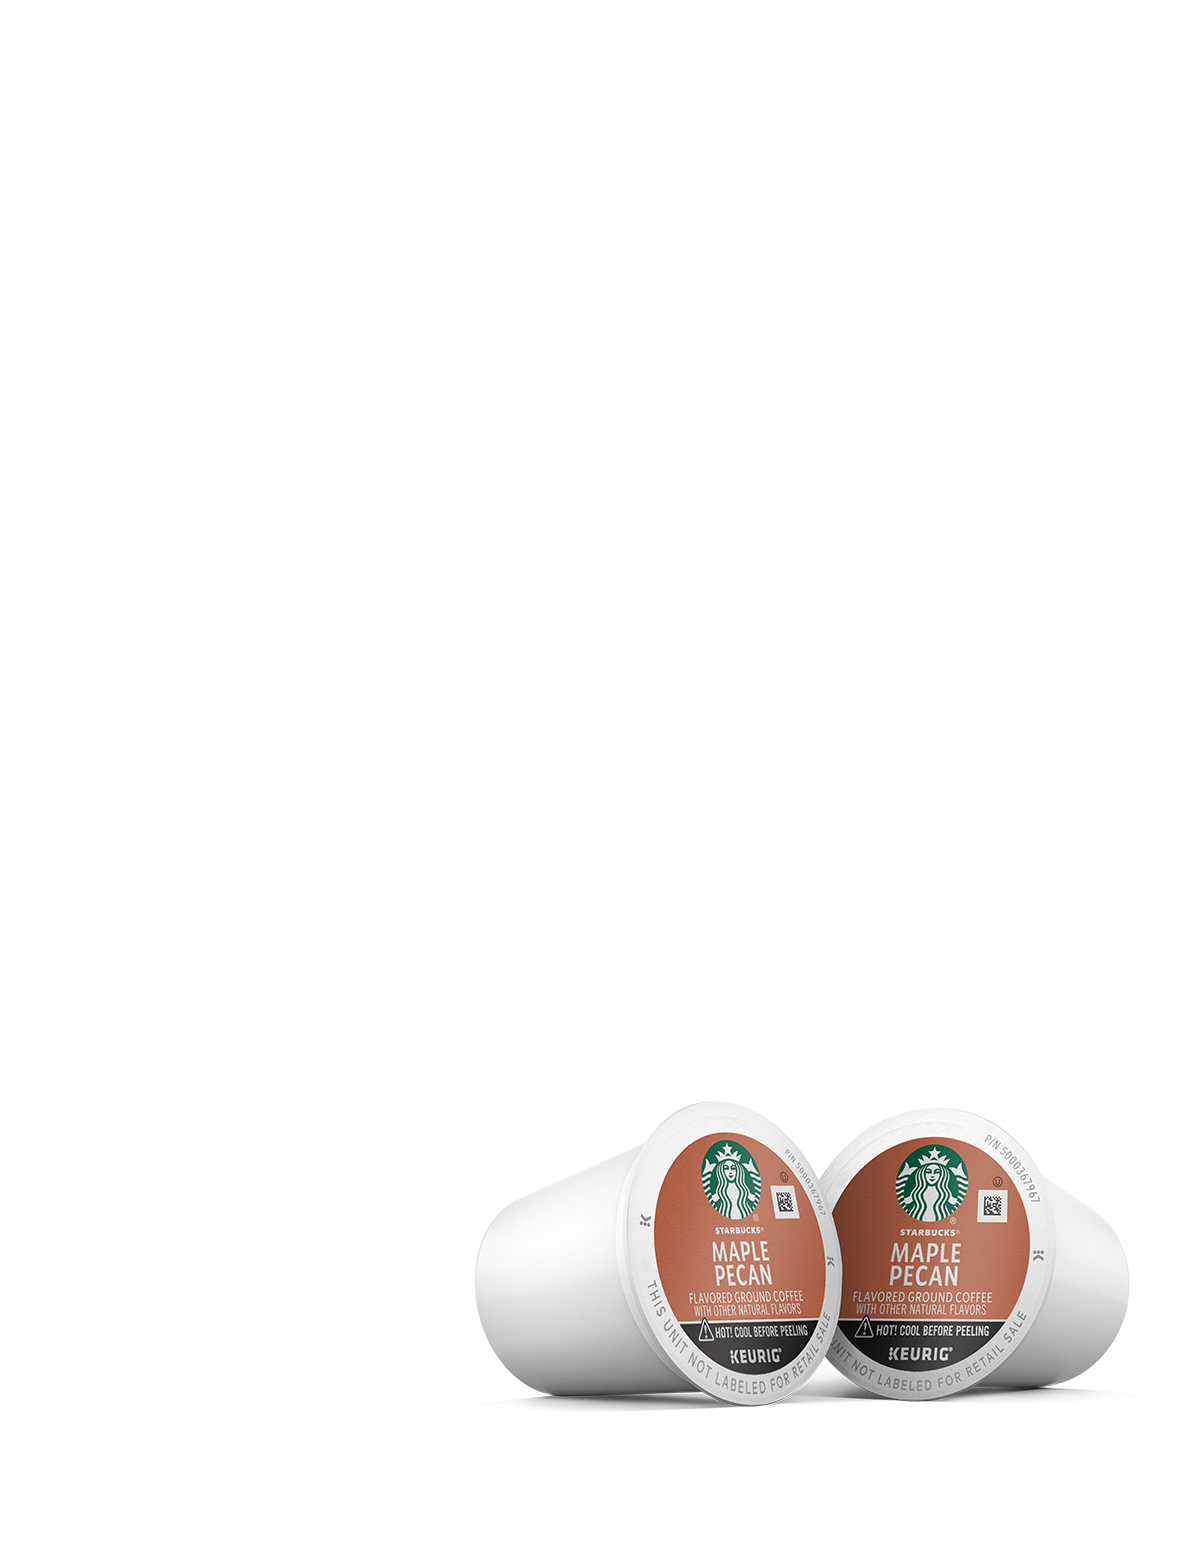 Starbucks® Maple Pecan Naturally Flavored Coffee